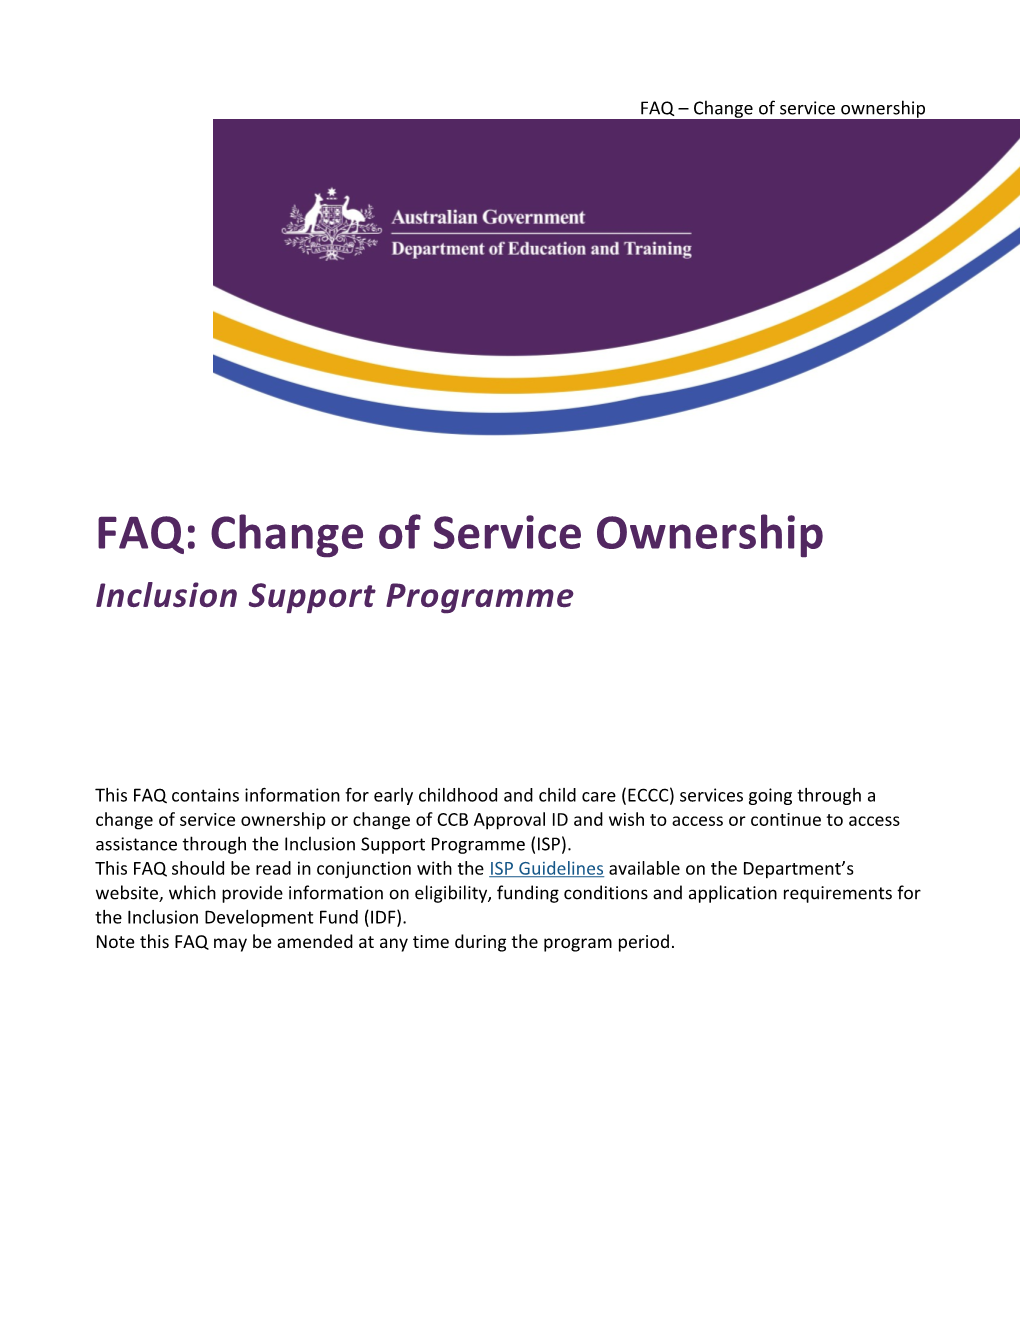 FAQ: Change of Service Ownership